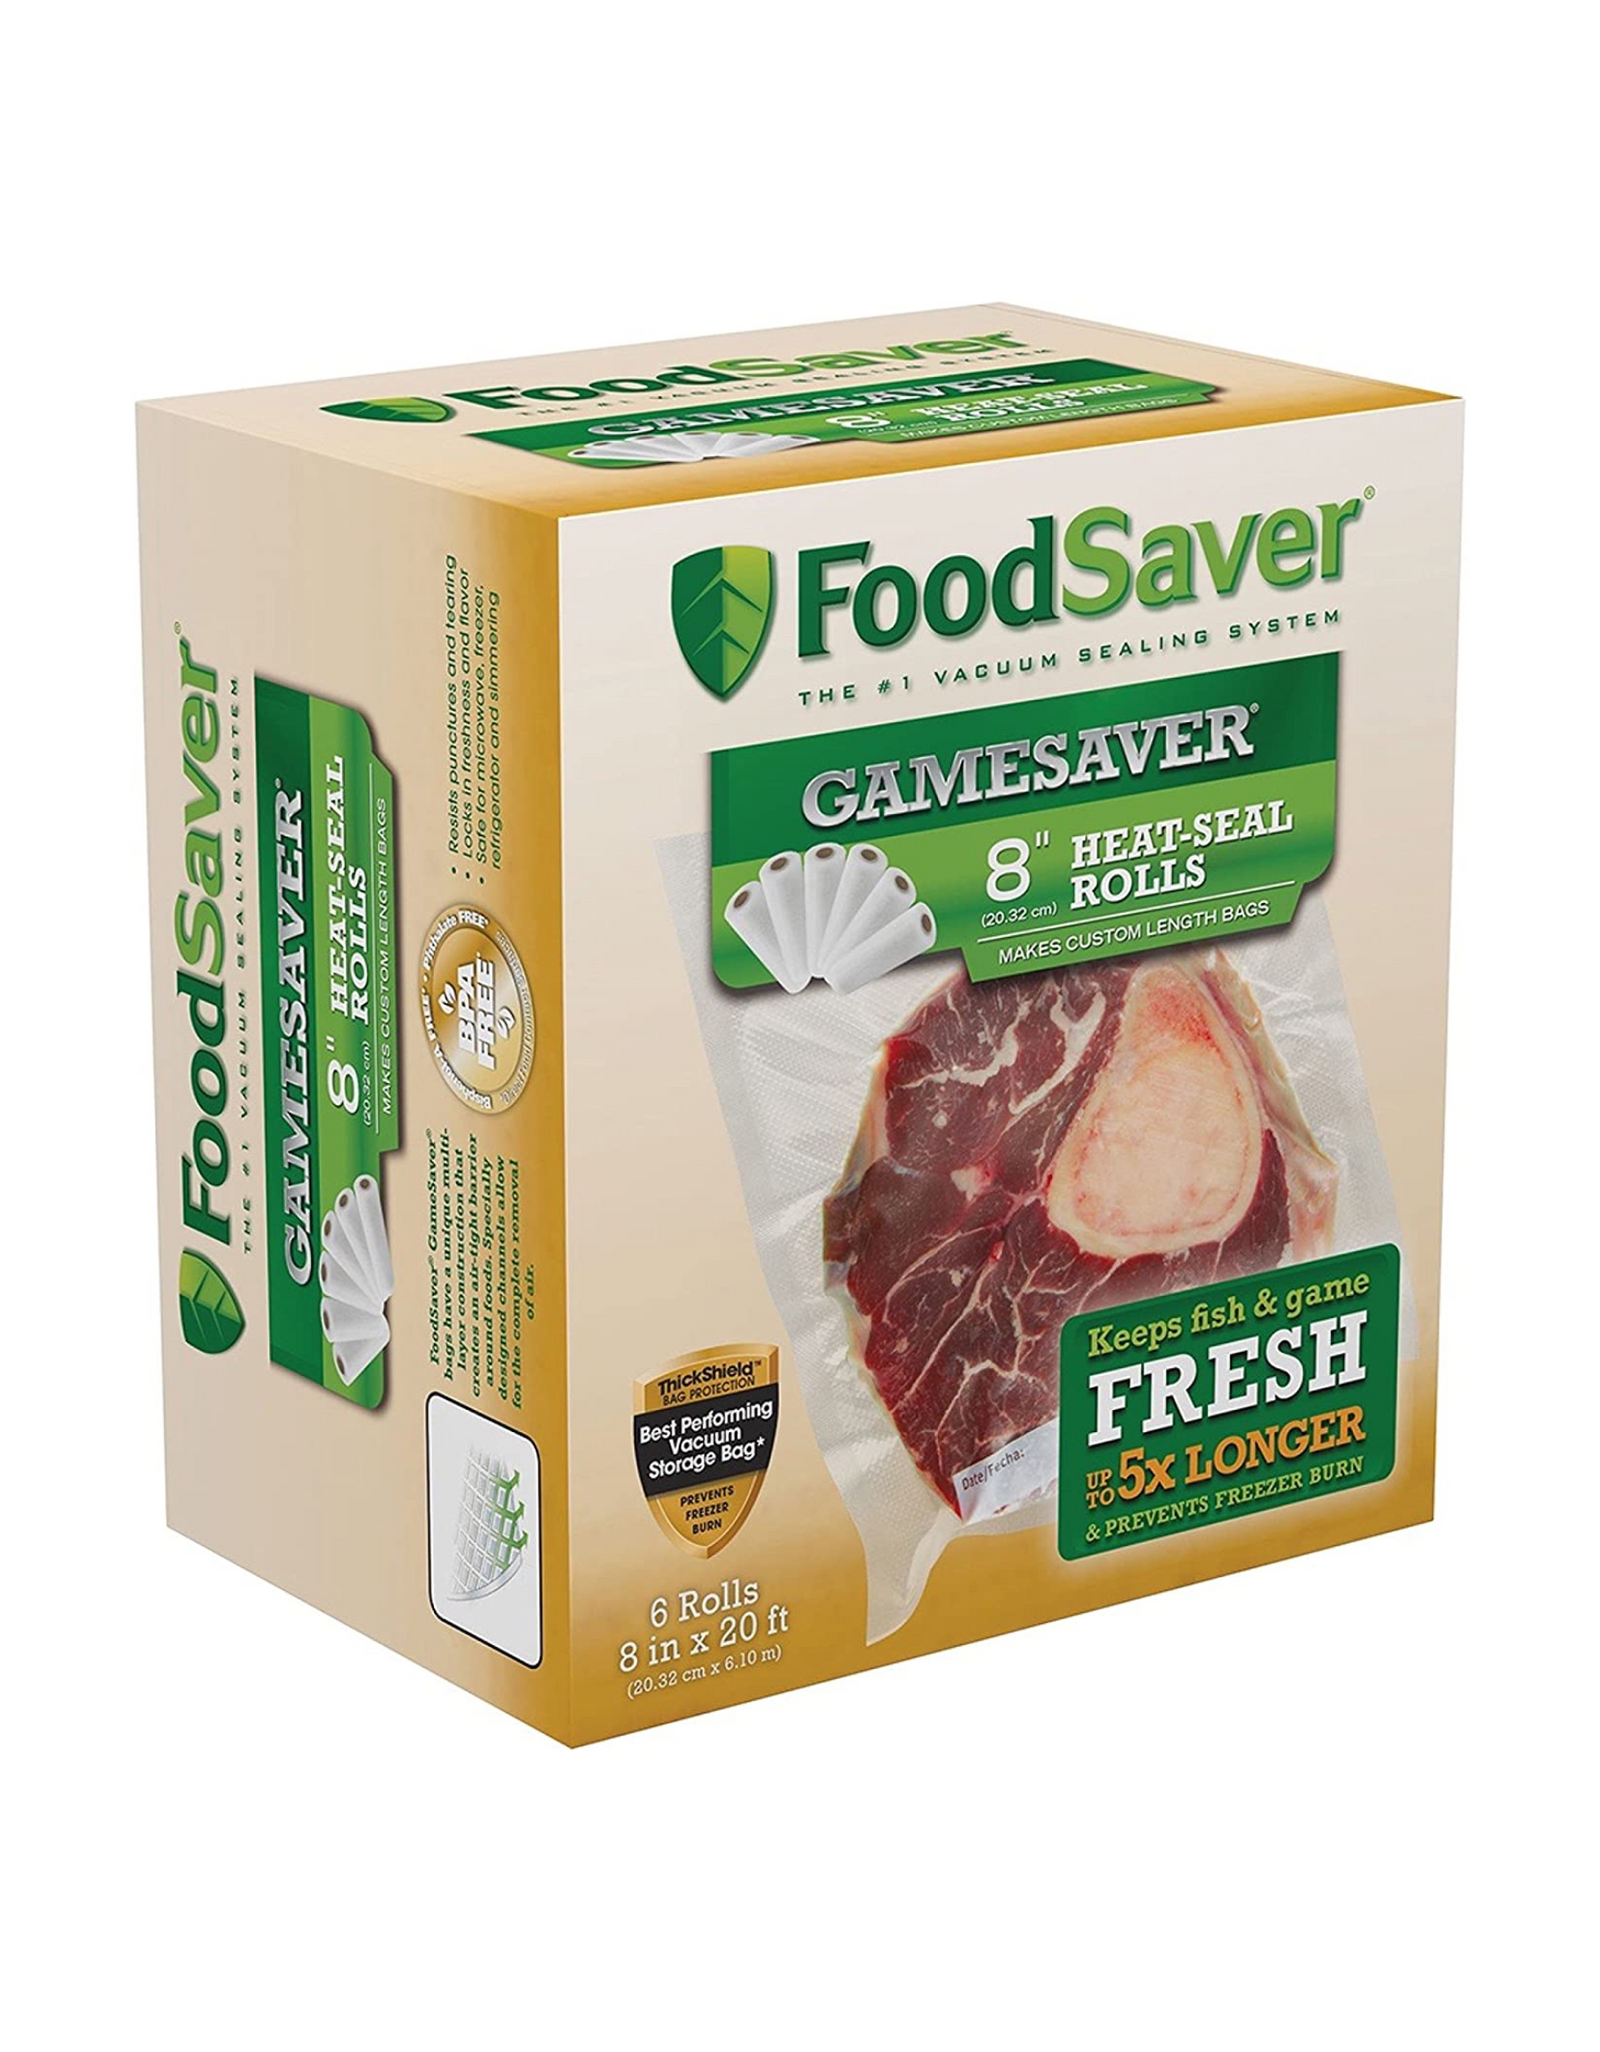 FoodSaver GameSaver Vacuum Sealer Bags, 8 Inch by 20 Ft. Heat-Seal Rolls, 6 Rolls